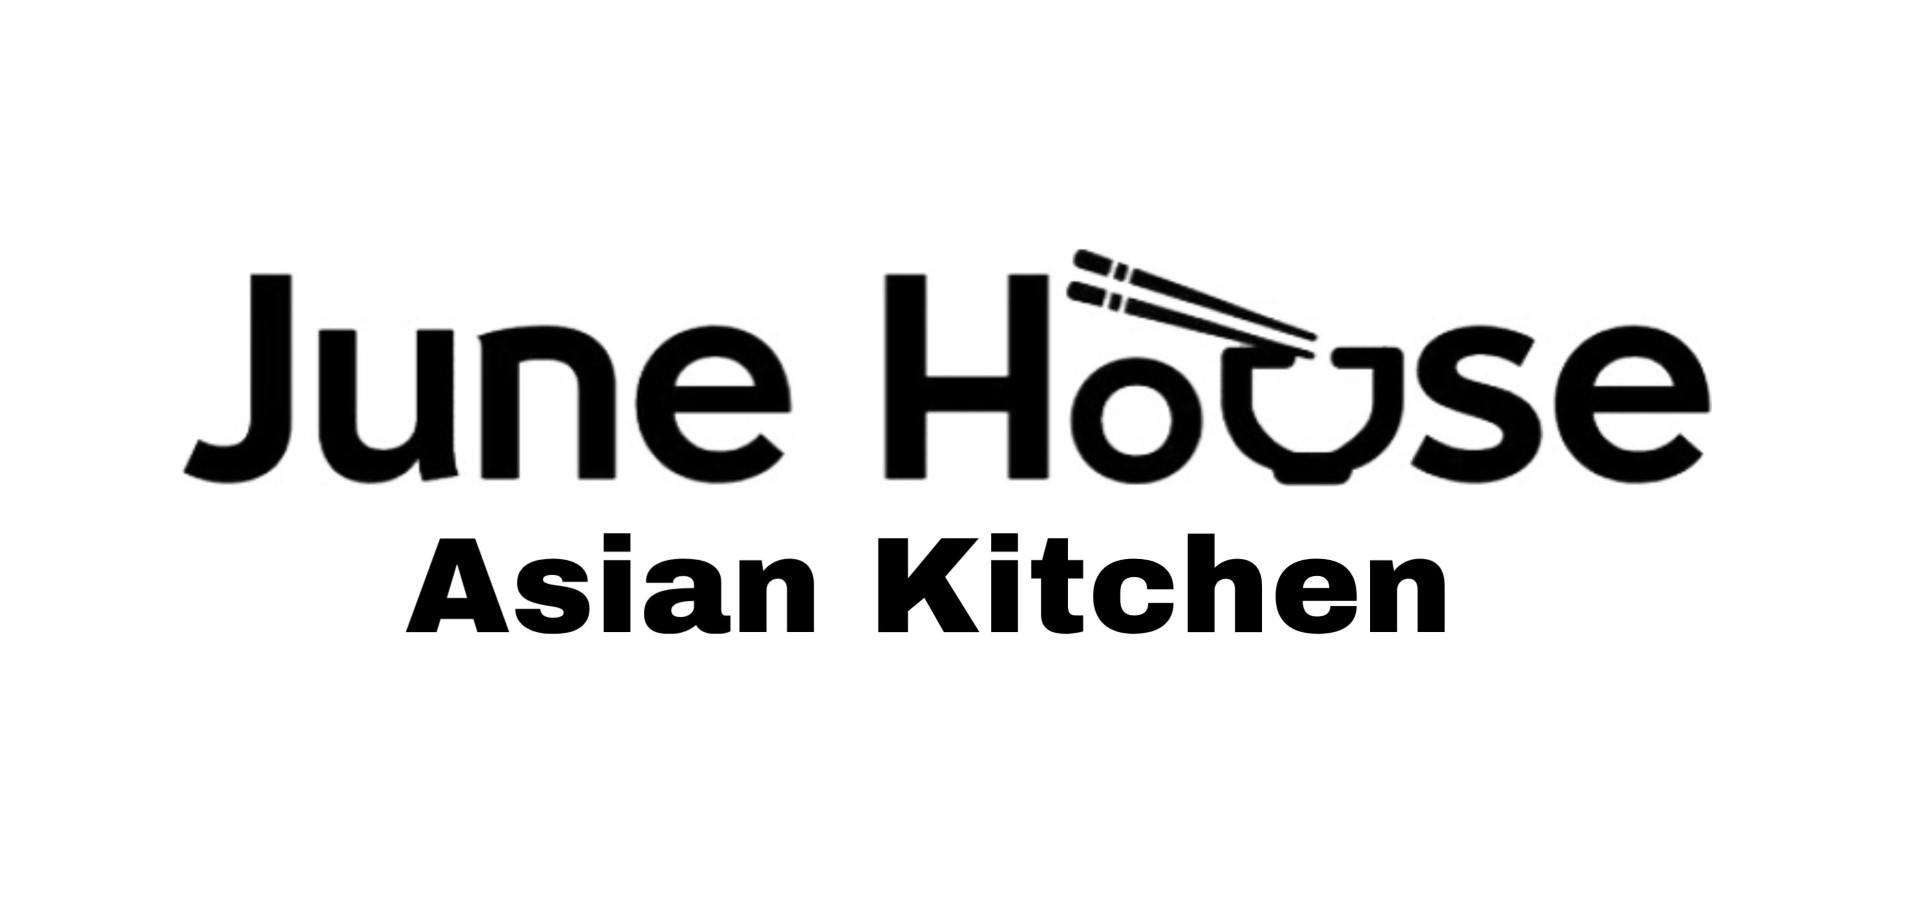 June House Asian Kitchen logo